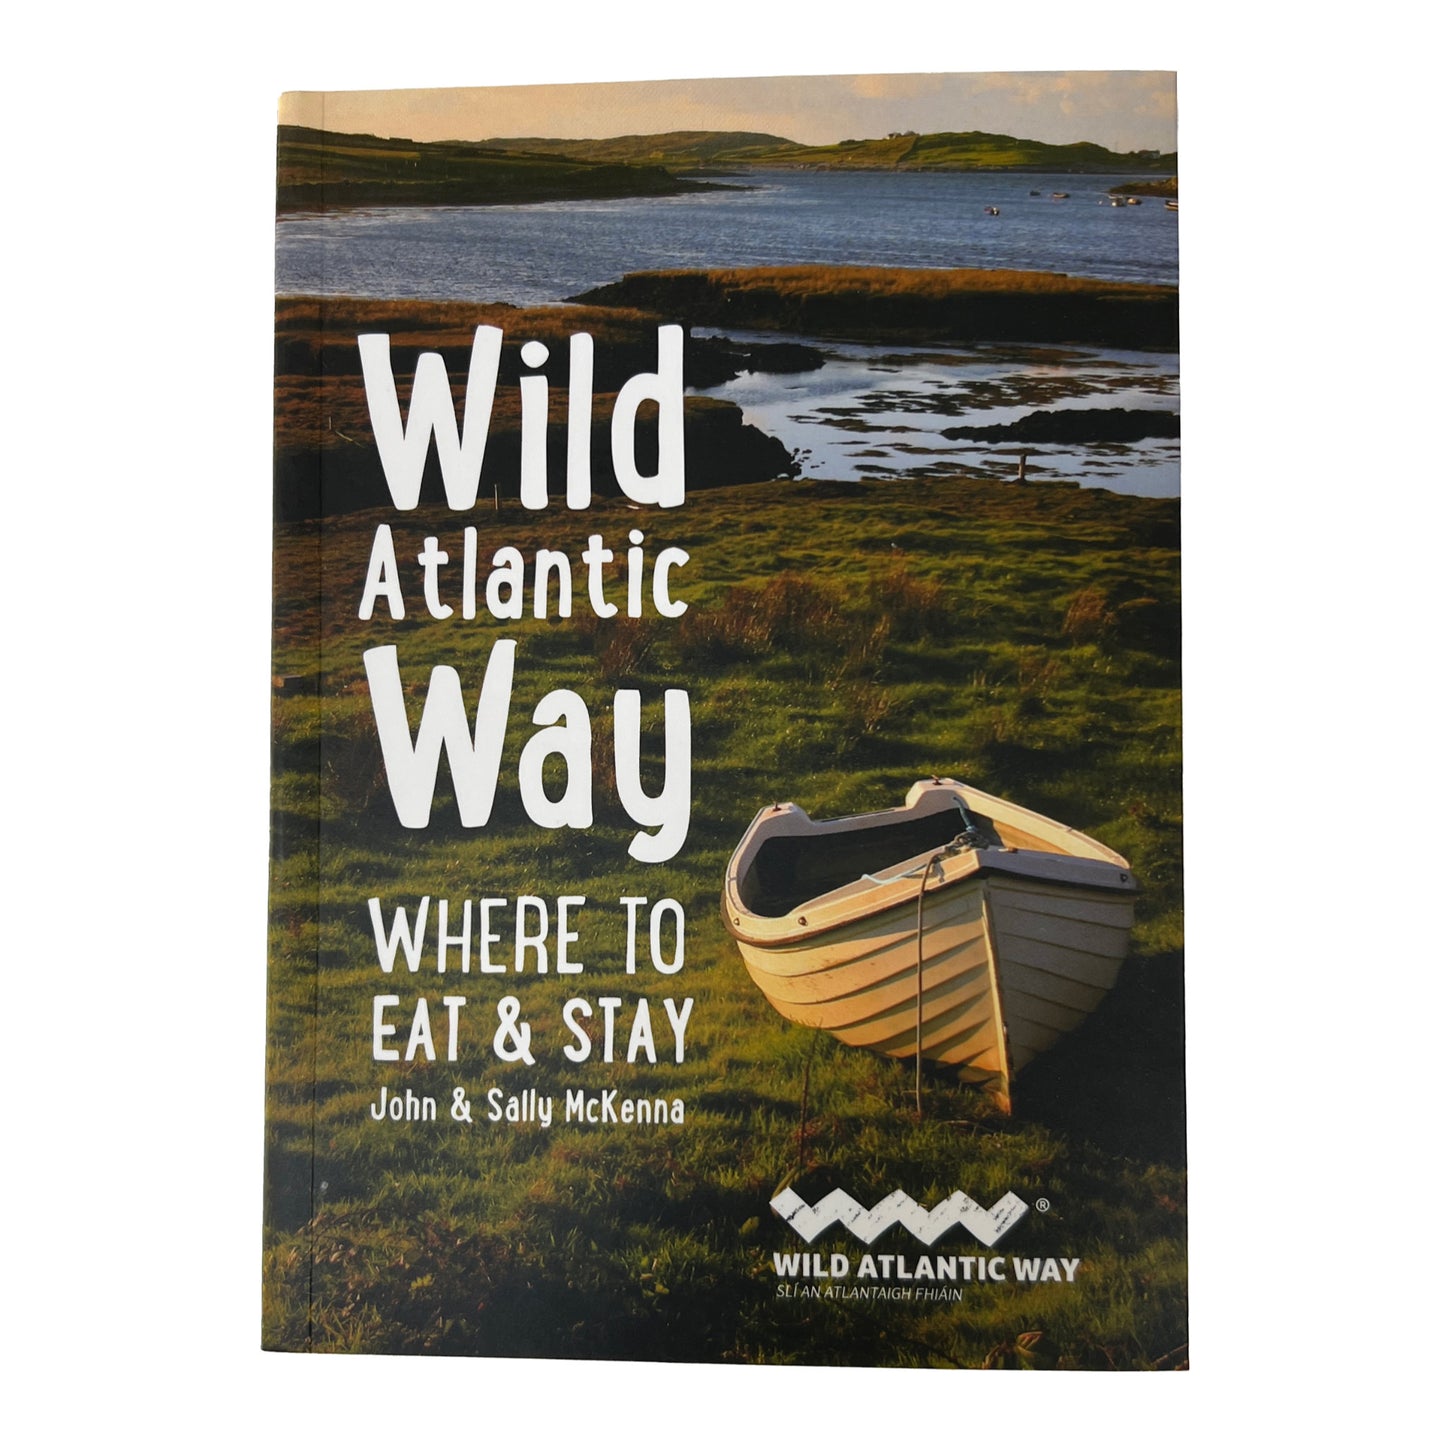 Wild Atlantic Way - Where To Eat & Stay